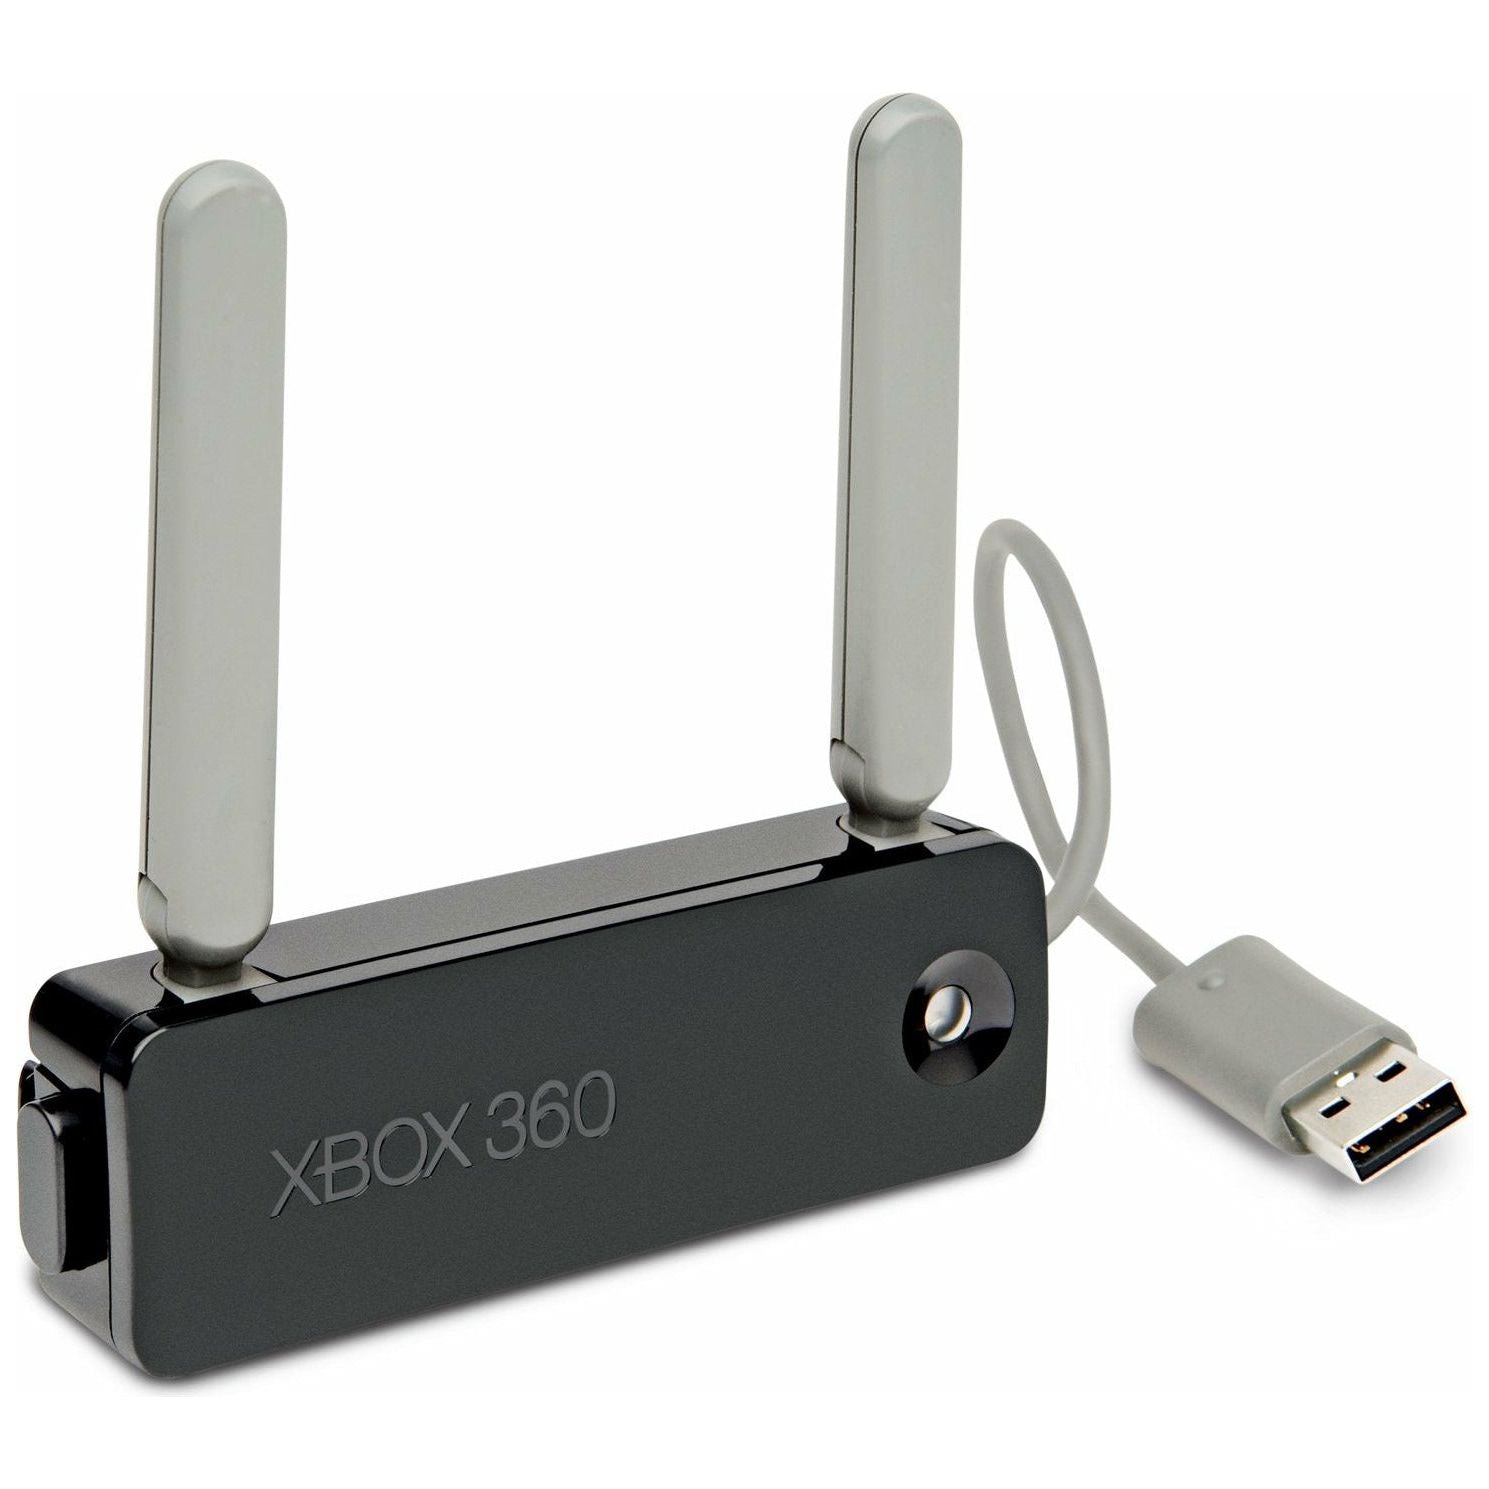 XBOX 360 - Wireless USB N Wifi Network Adapter (Double Antenna)